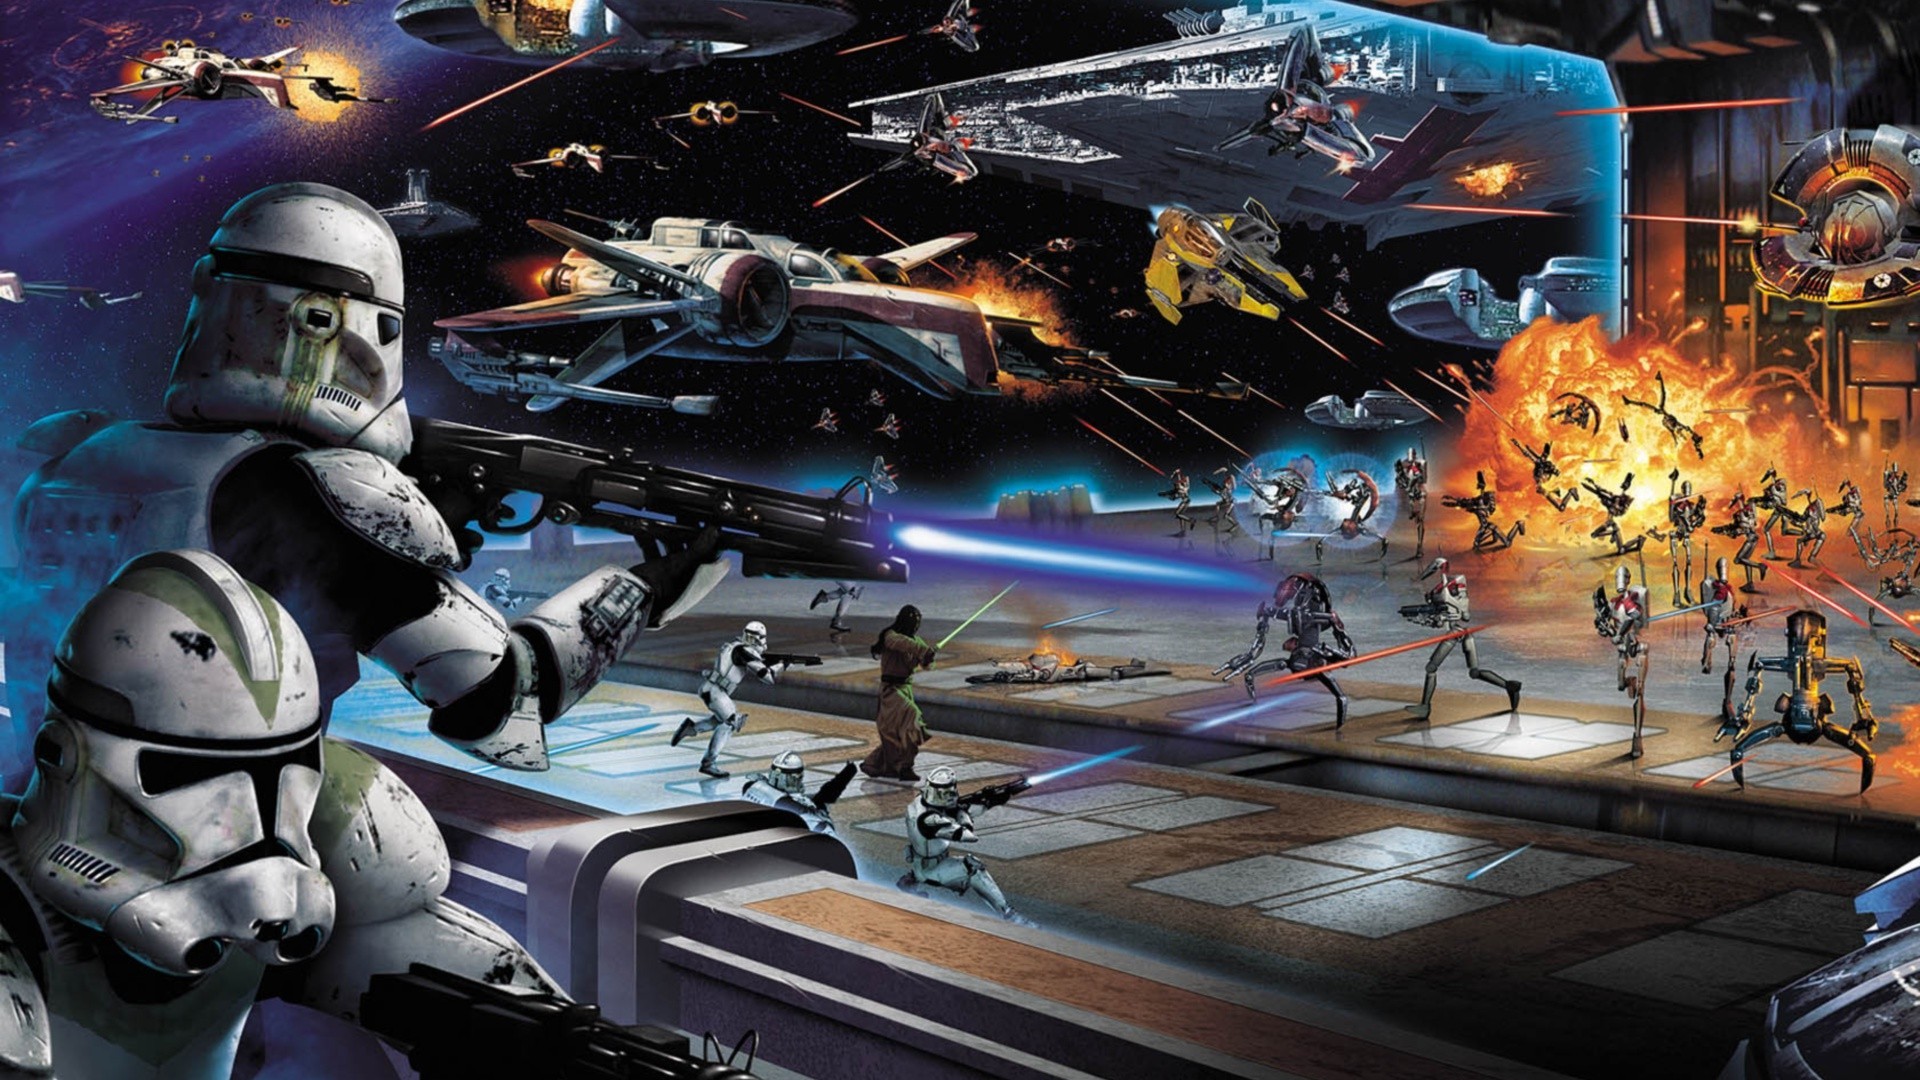 50+] Star Wars Battlefront 2 Wallpaper